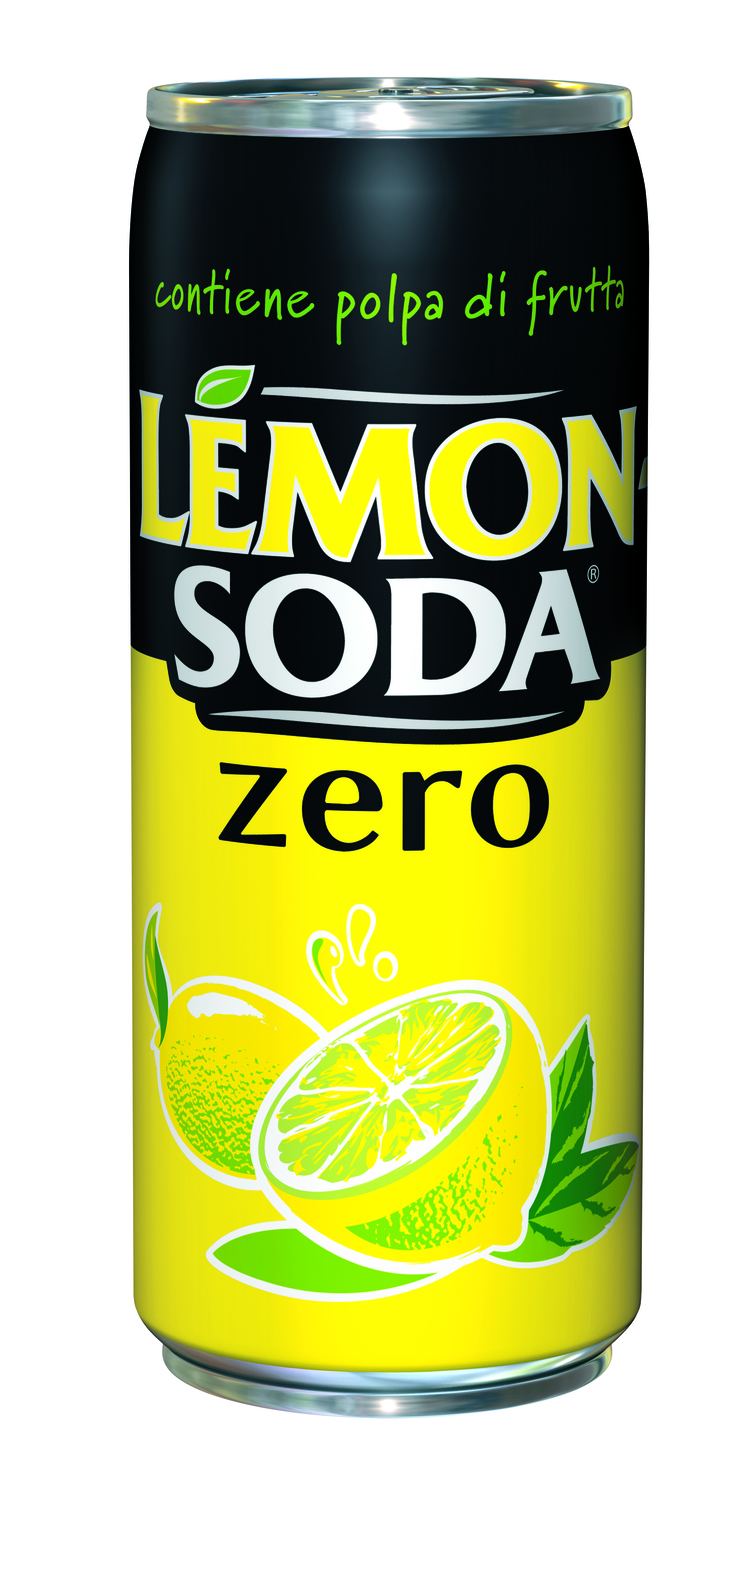 Lemonsoda Lemonsoda Zero Campari Corporate